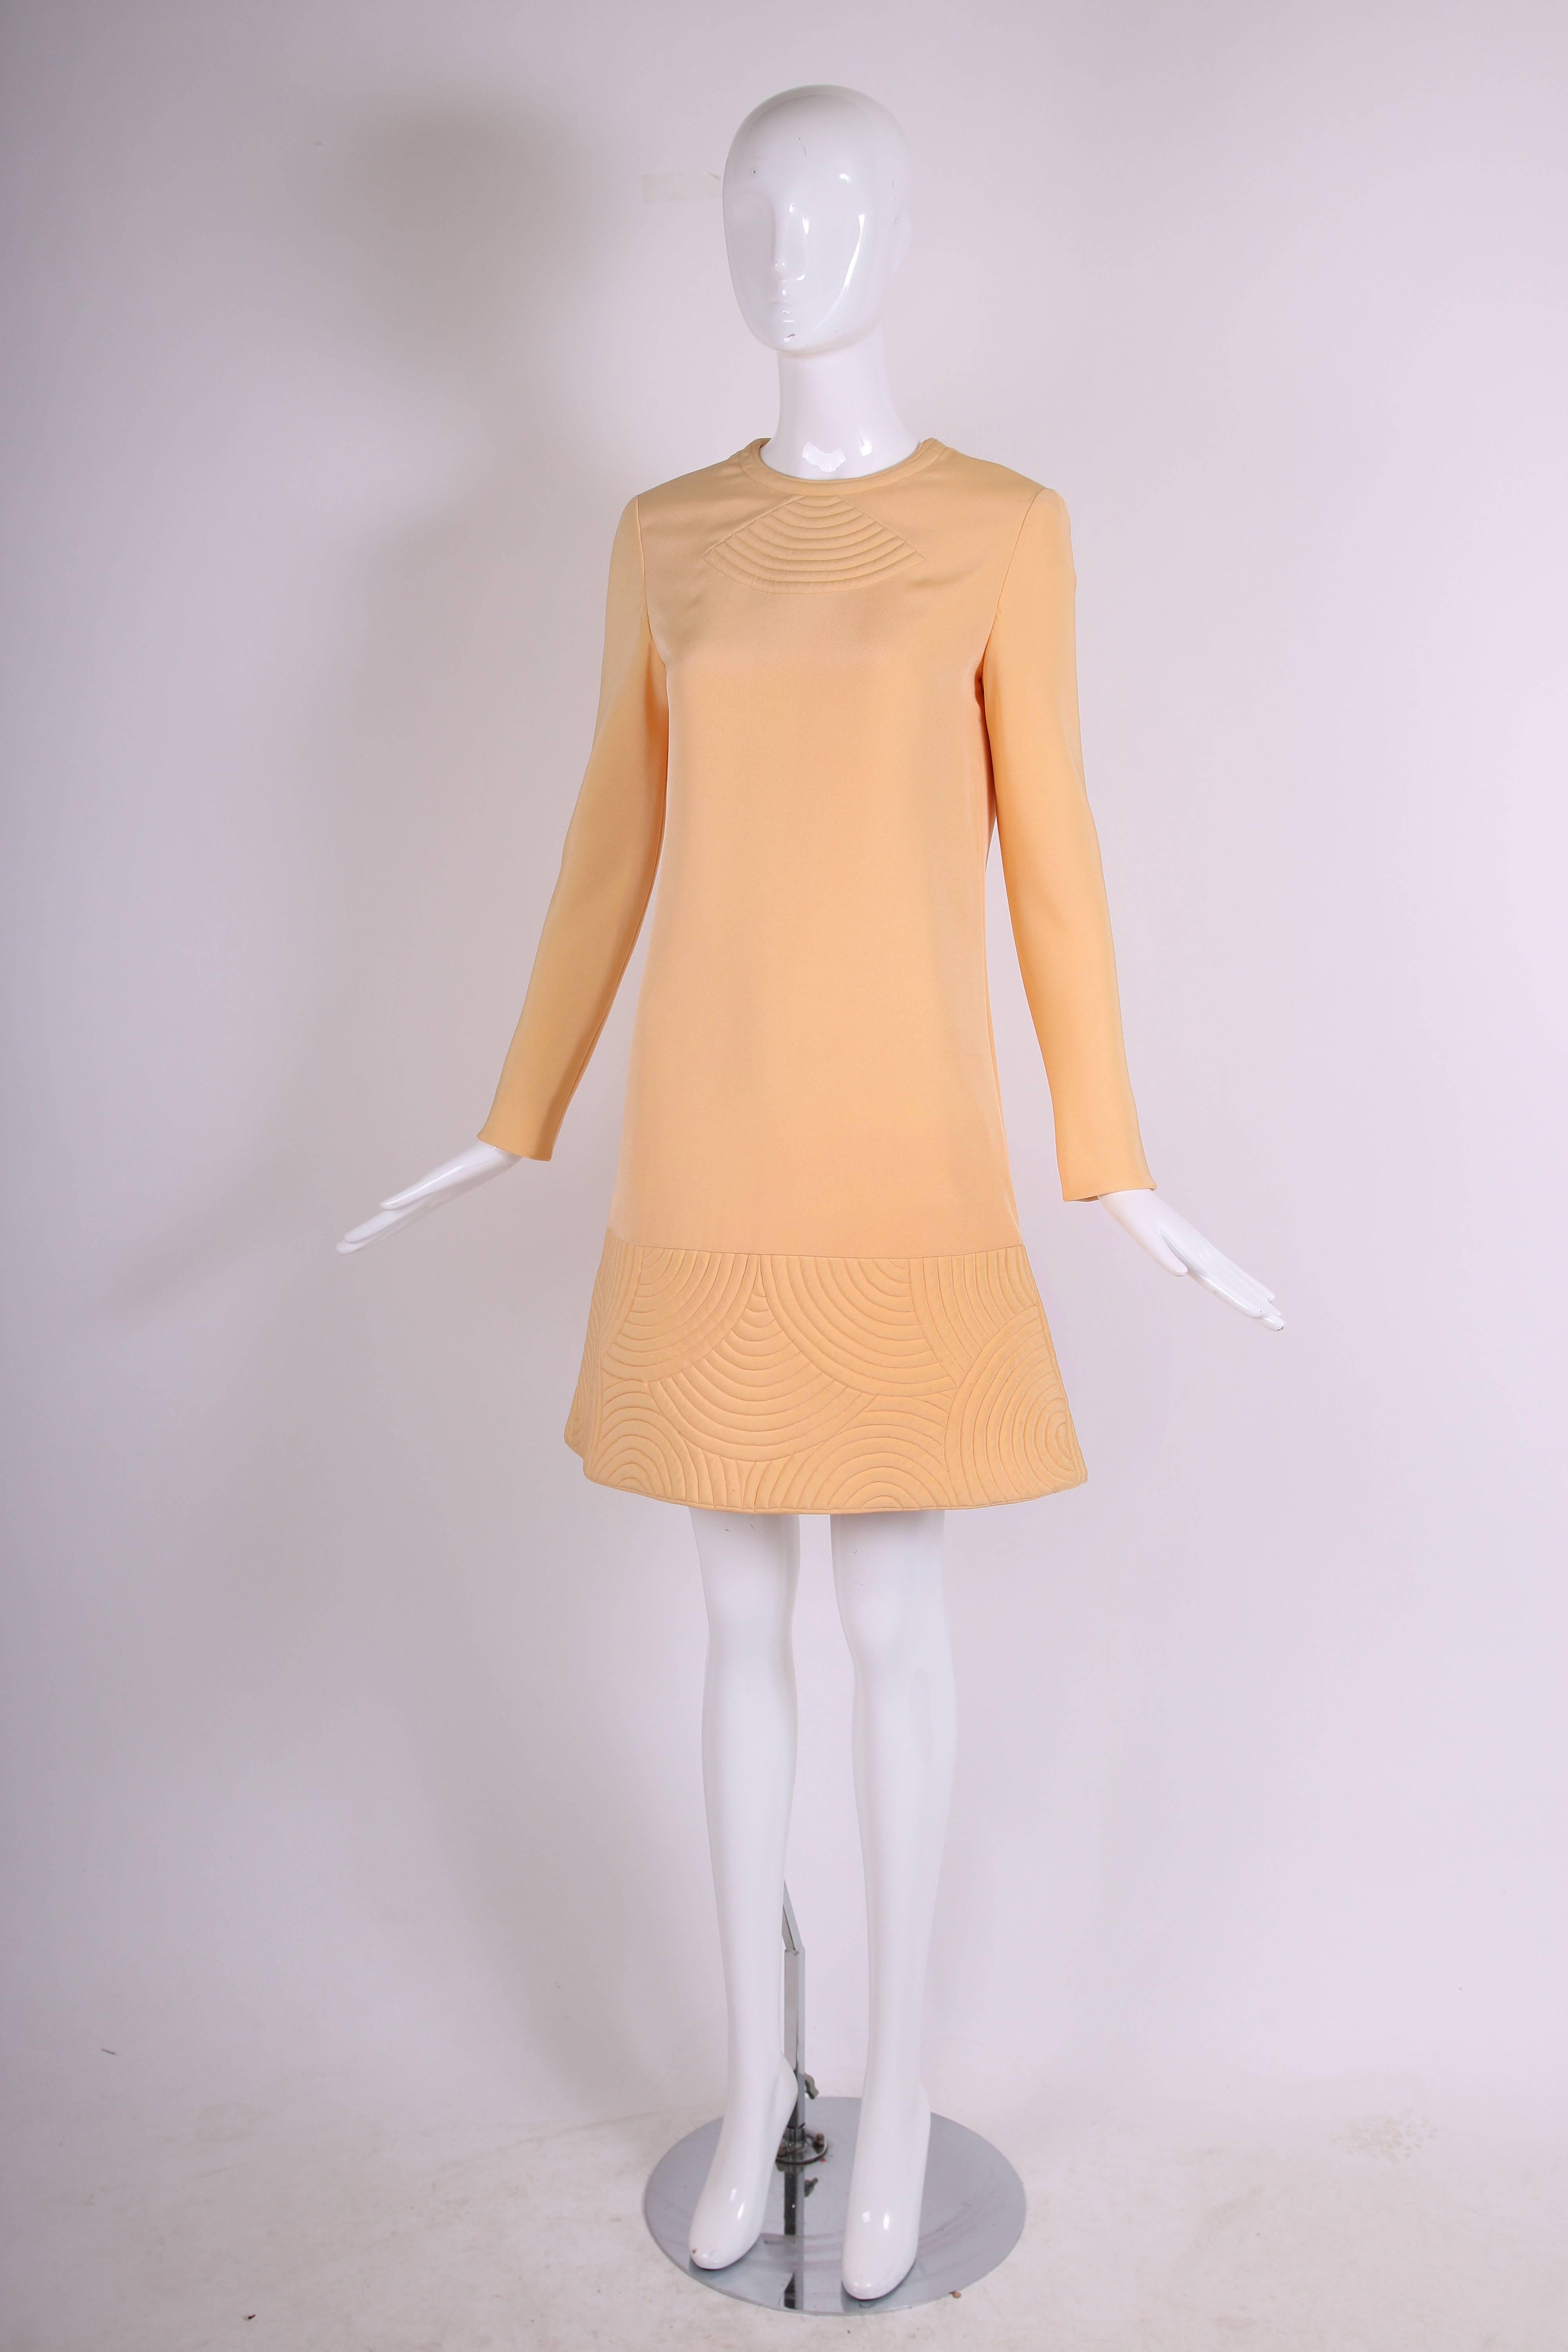 Pierre Cardin Mod Space Age Mini Dress with Geometric Design, 1970s For ...